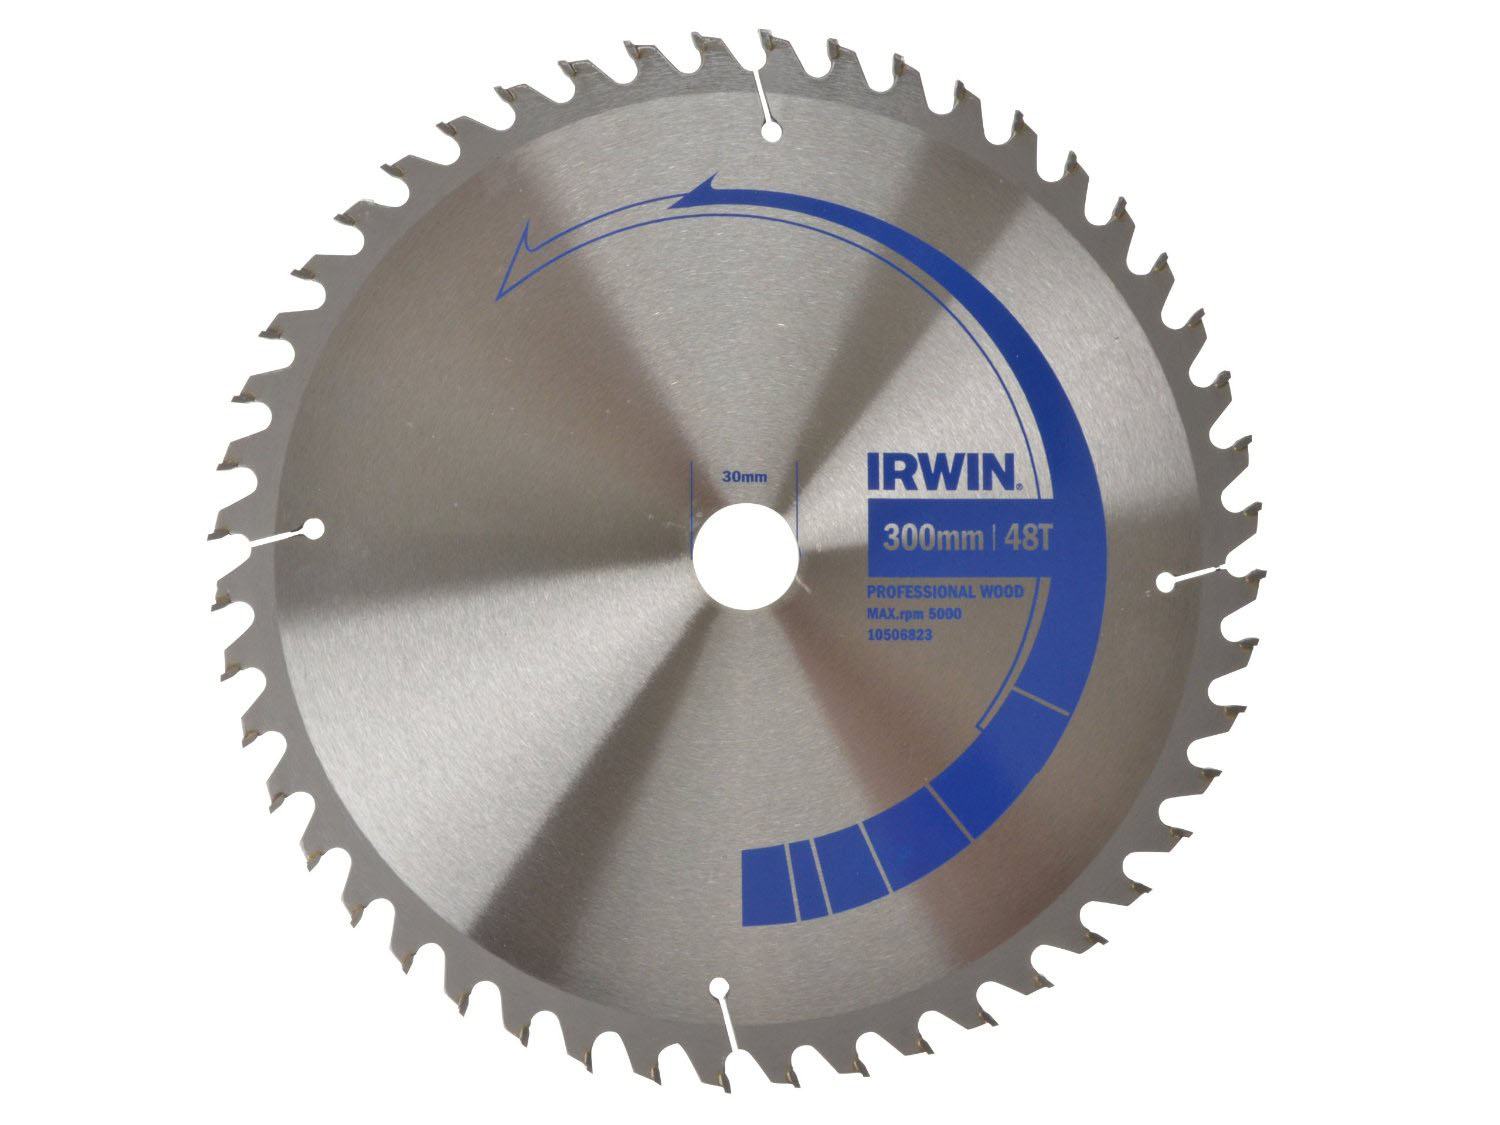 IRWIN IRWIN� Construction Circular Saw Blade 150 x 20mm x 30T ATBIRW189709018970 